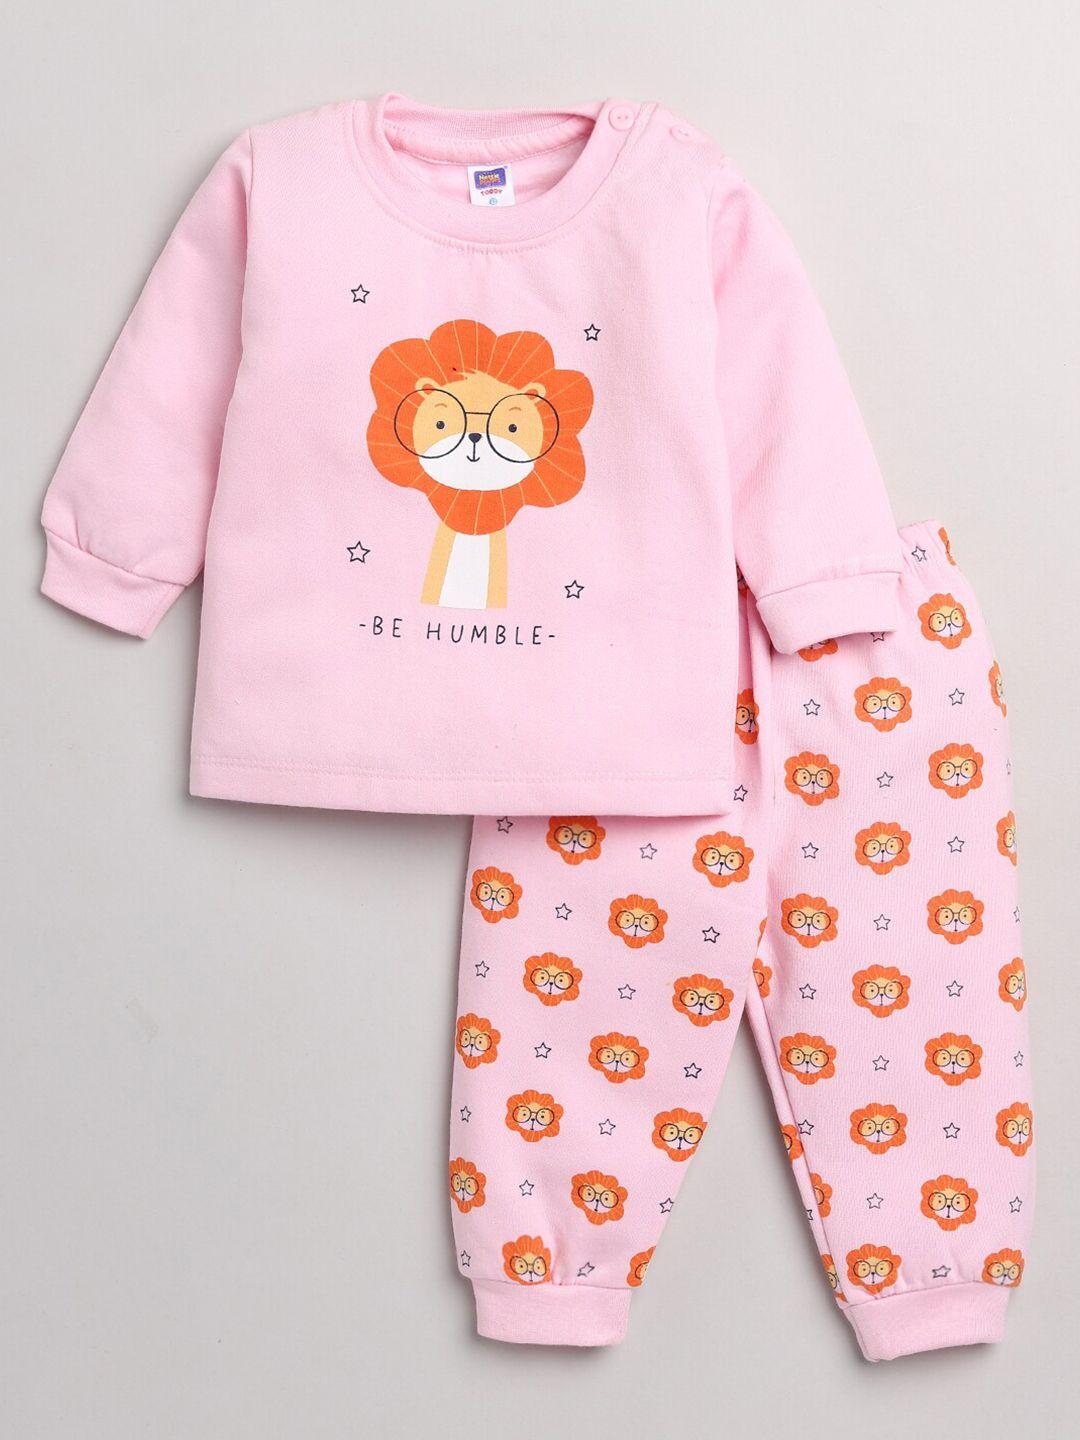 nottie-planet-kids-pink-&-orange-printed-pure-cotton-clothing-set